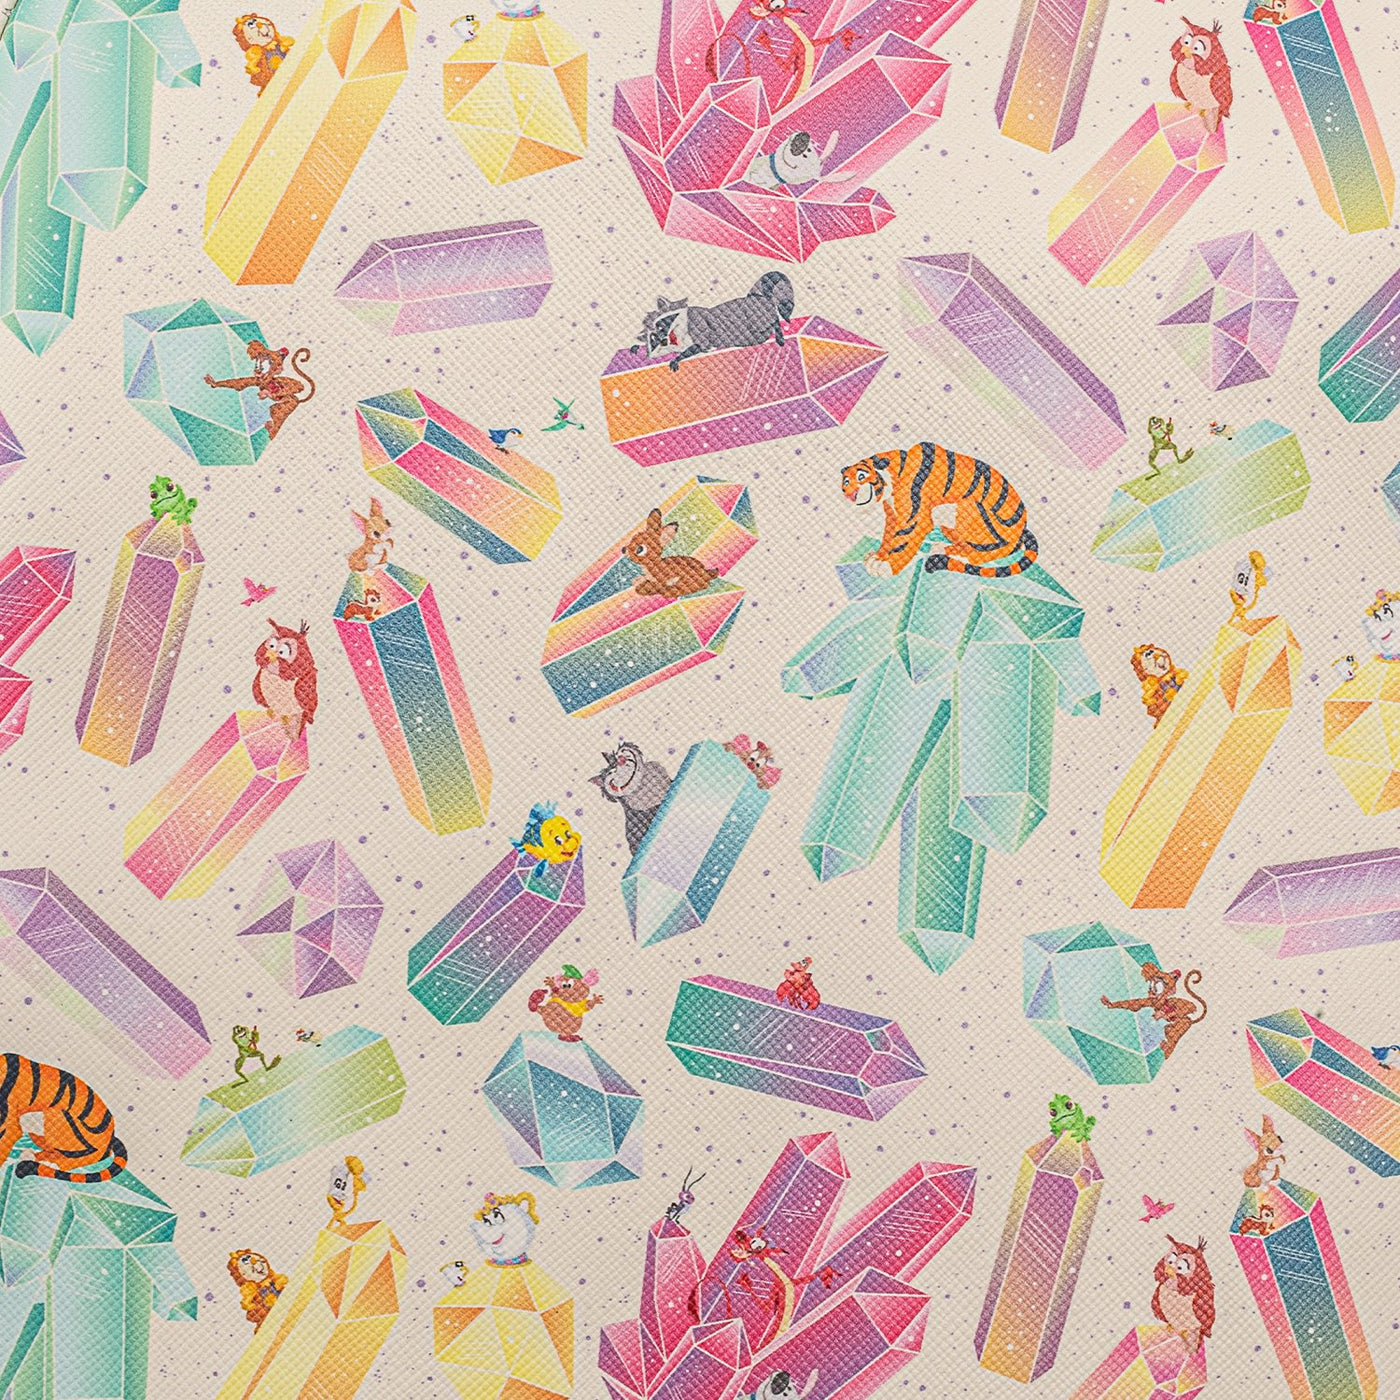 Loungefly Disney Crystal Sidekicks Allover Print Mini Backpack